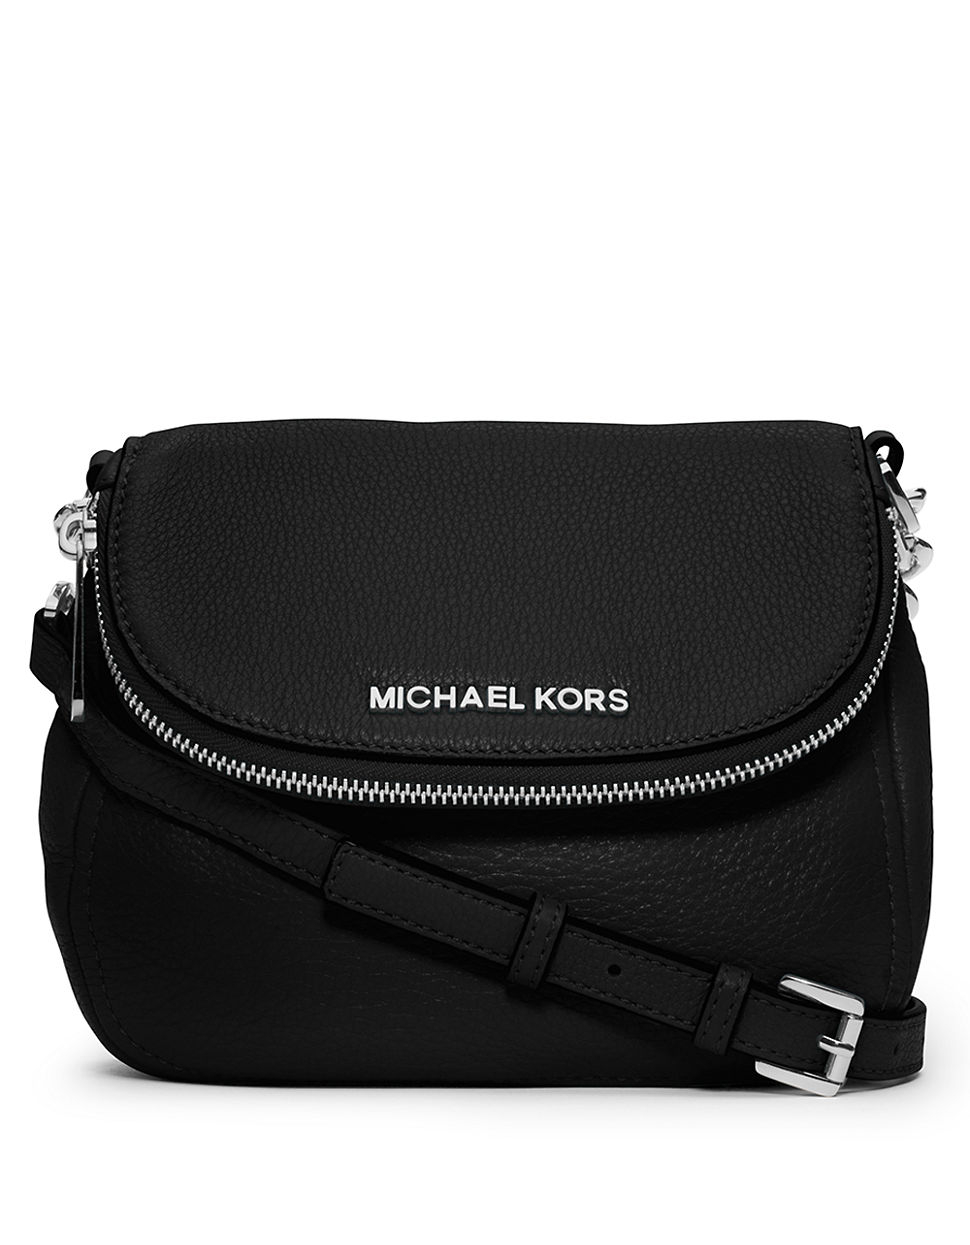 Michael Michael Kors Bedford Leather Flap Crossbody Bag in Black | Lyst